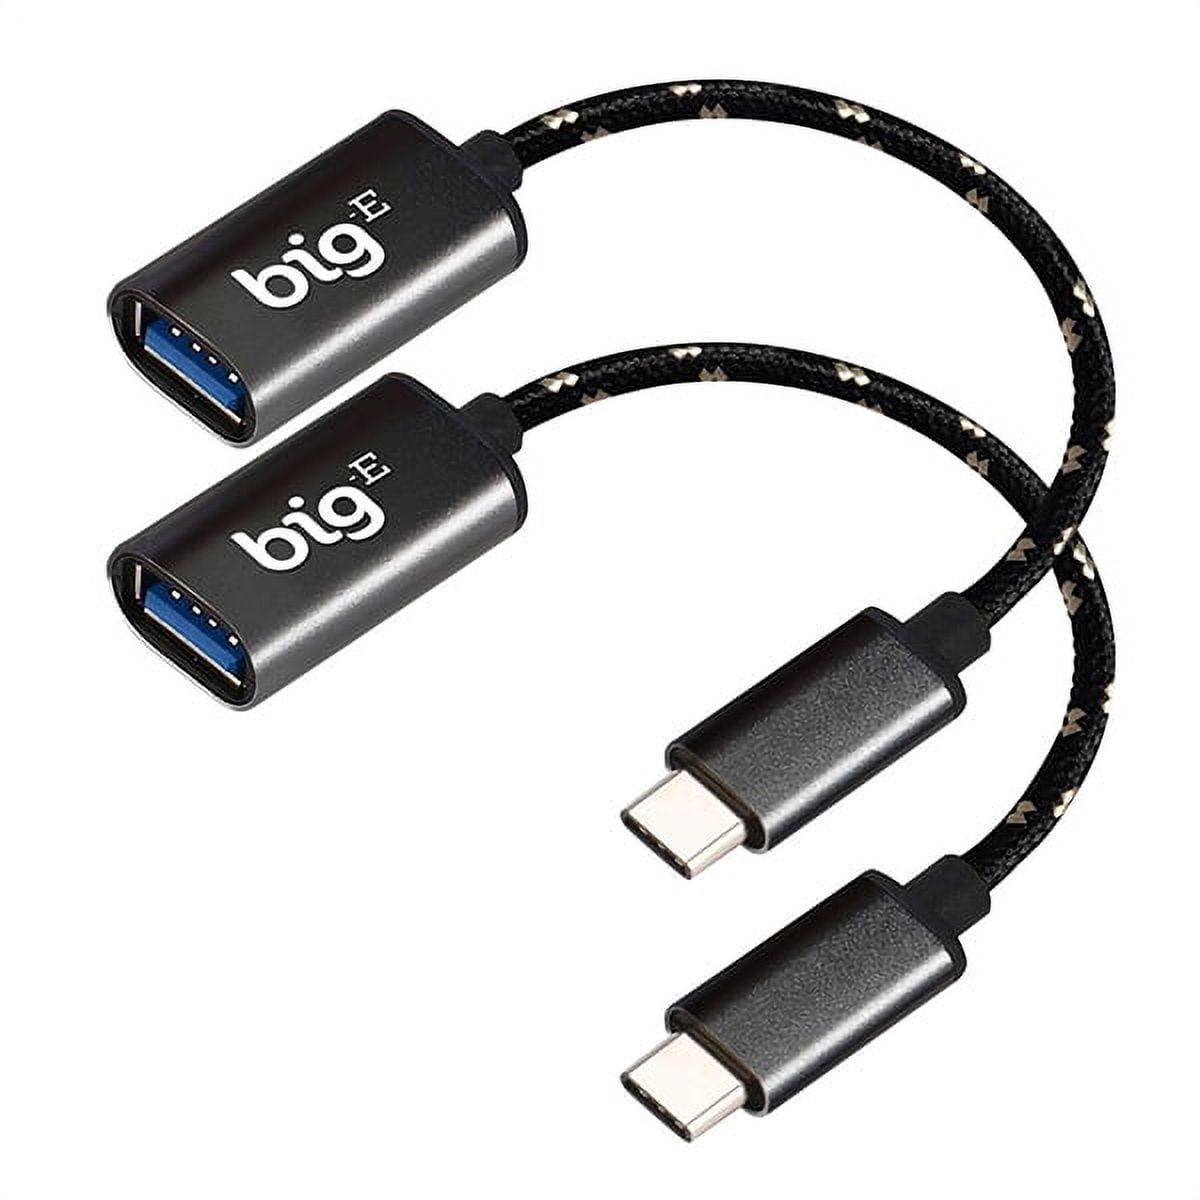 USB 3.0 and USB Type-C OTG Card Reader - Sabrent